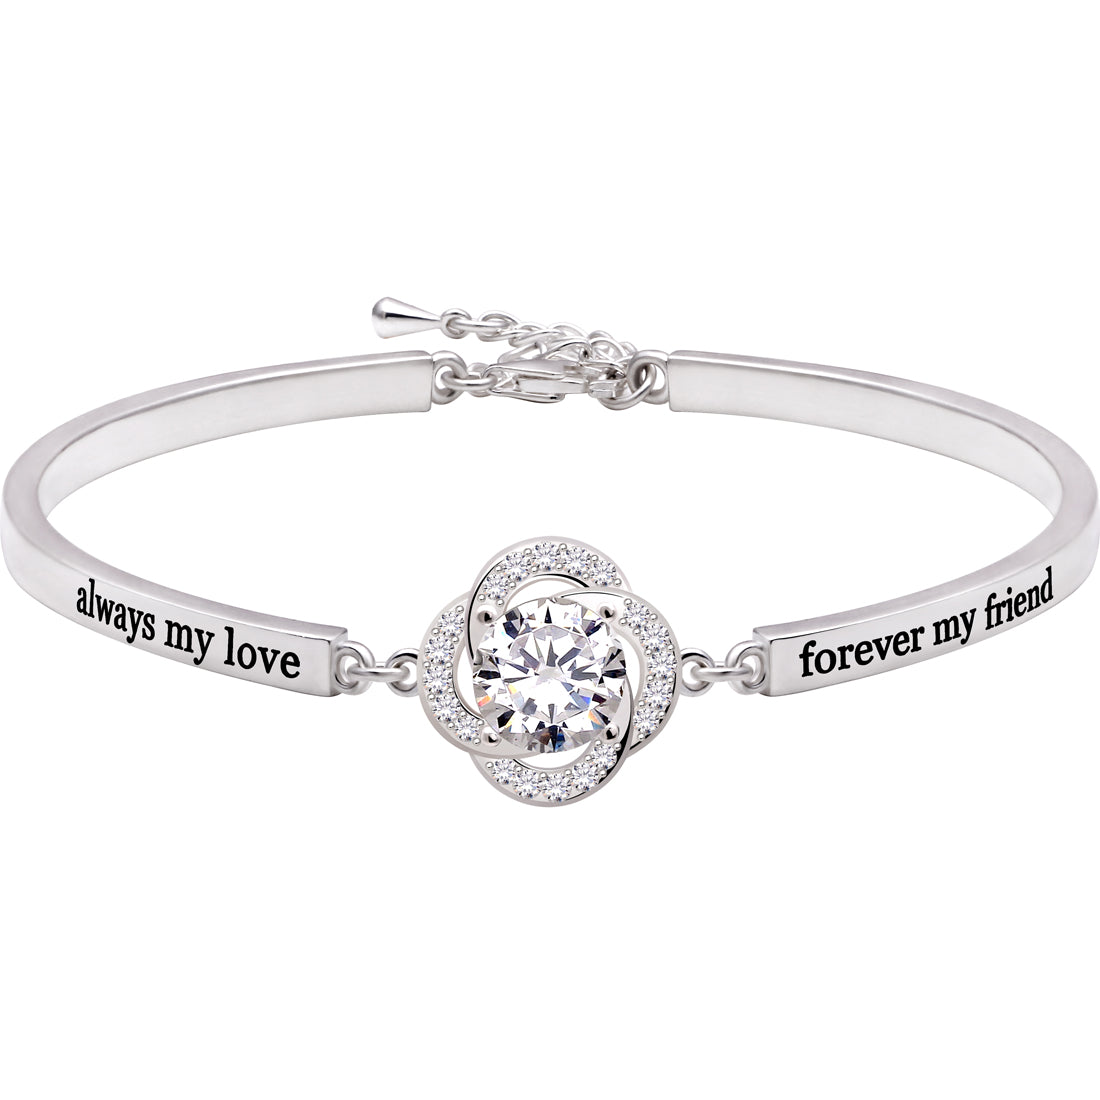 ALOV Jewelry Sterling Silver "always my love forever my friend" Cubic Zirconia Bracelet